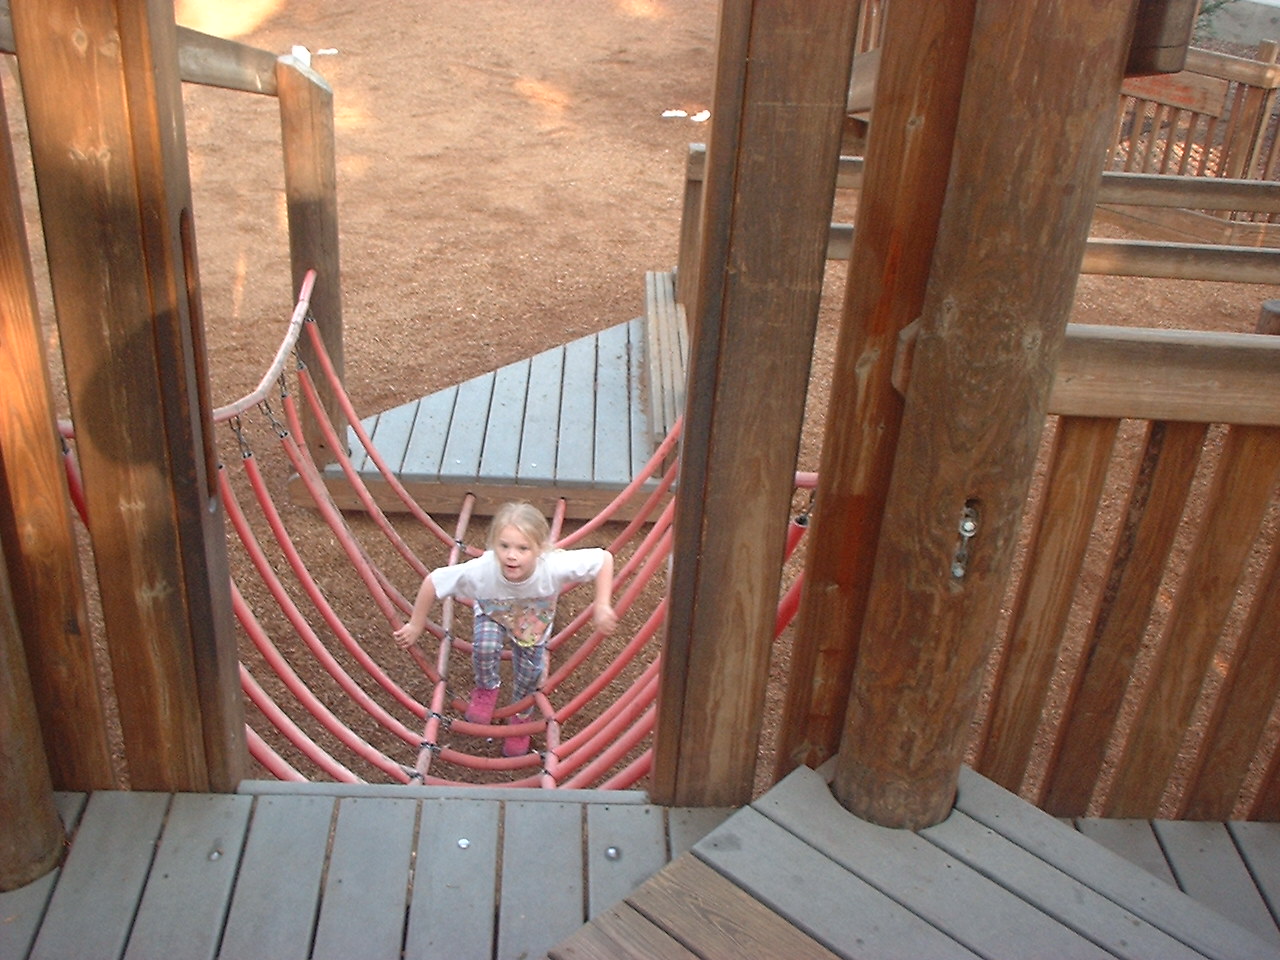 child playing on playground structurek